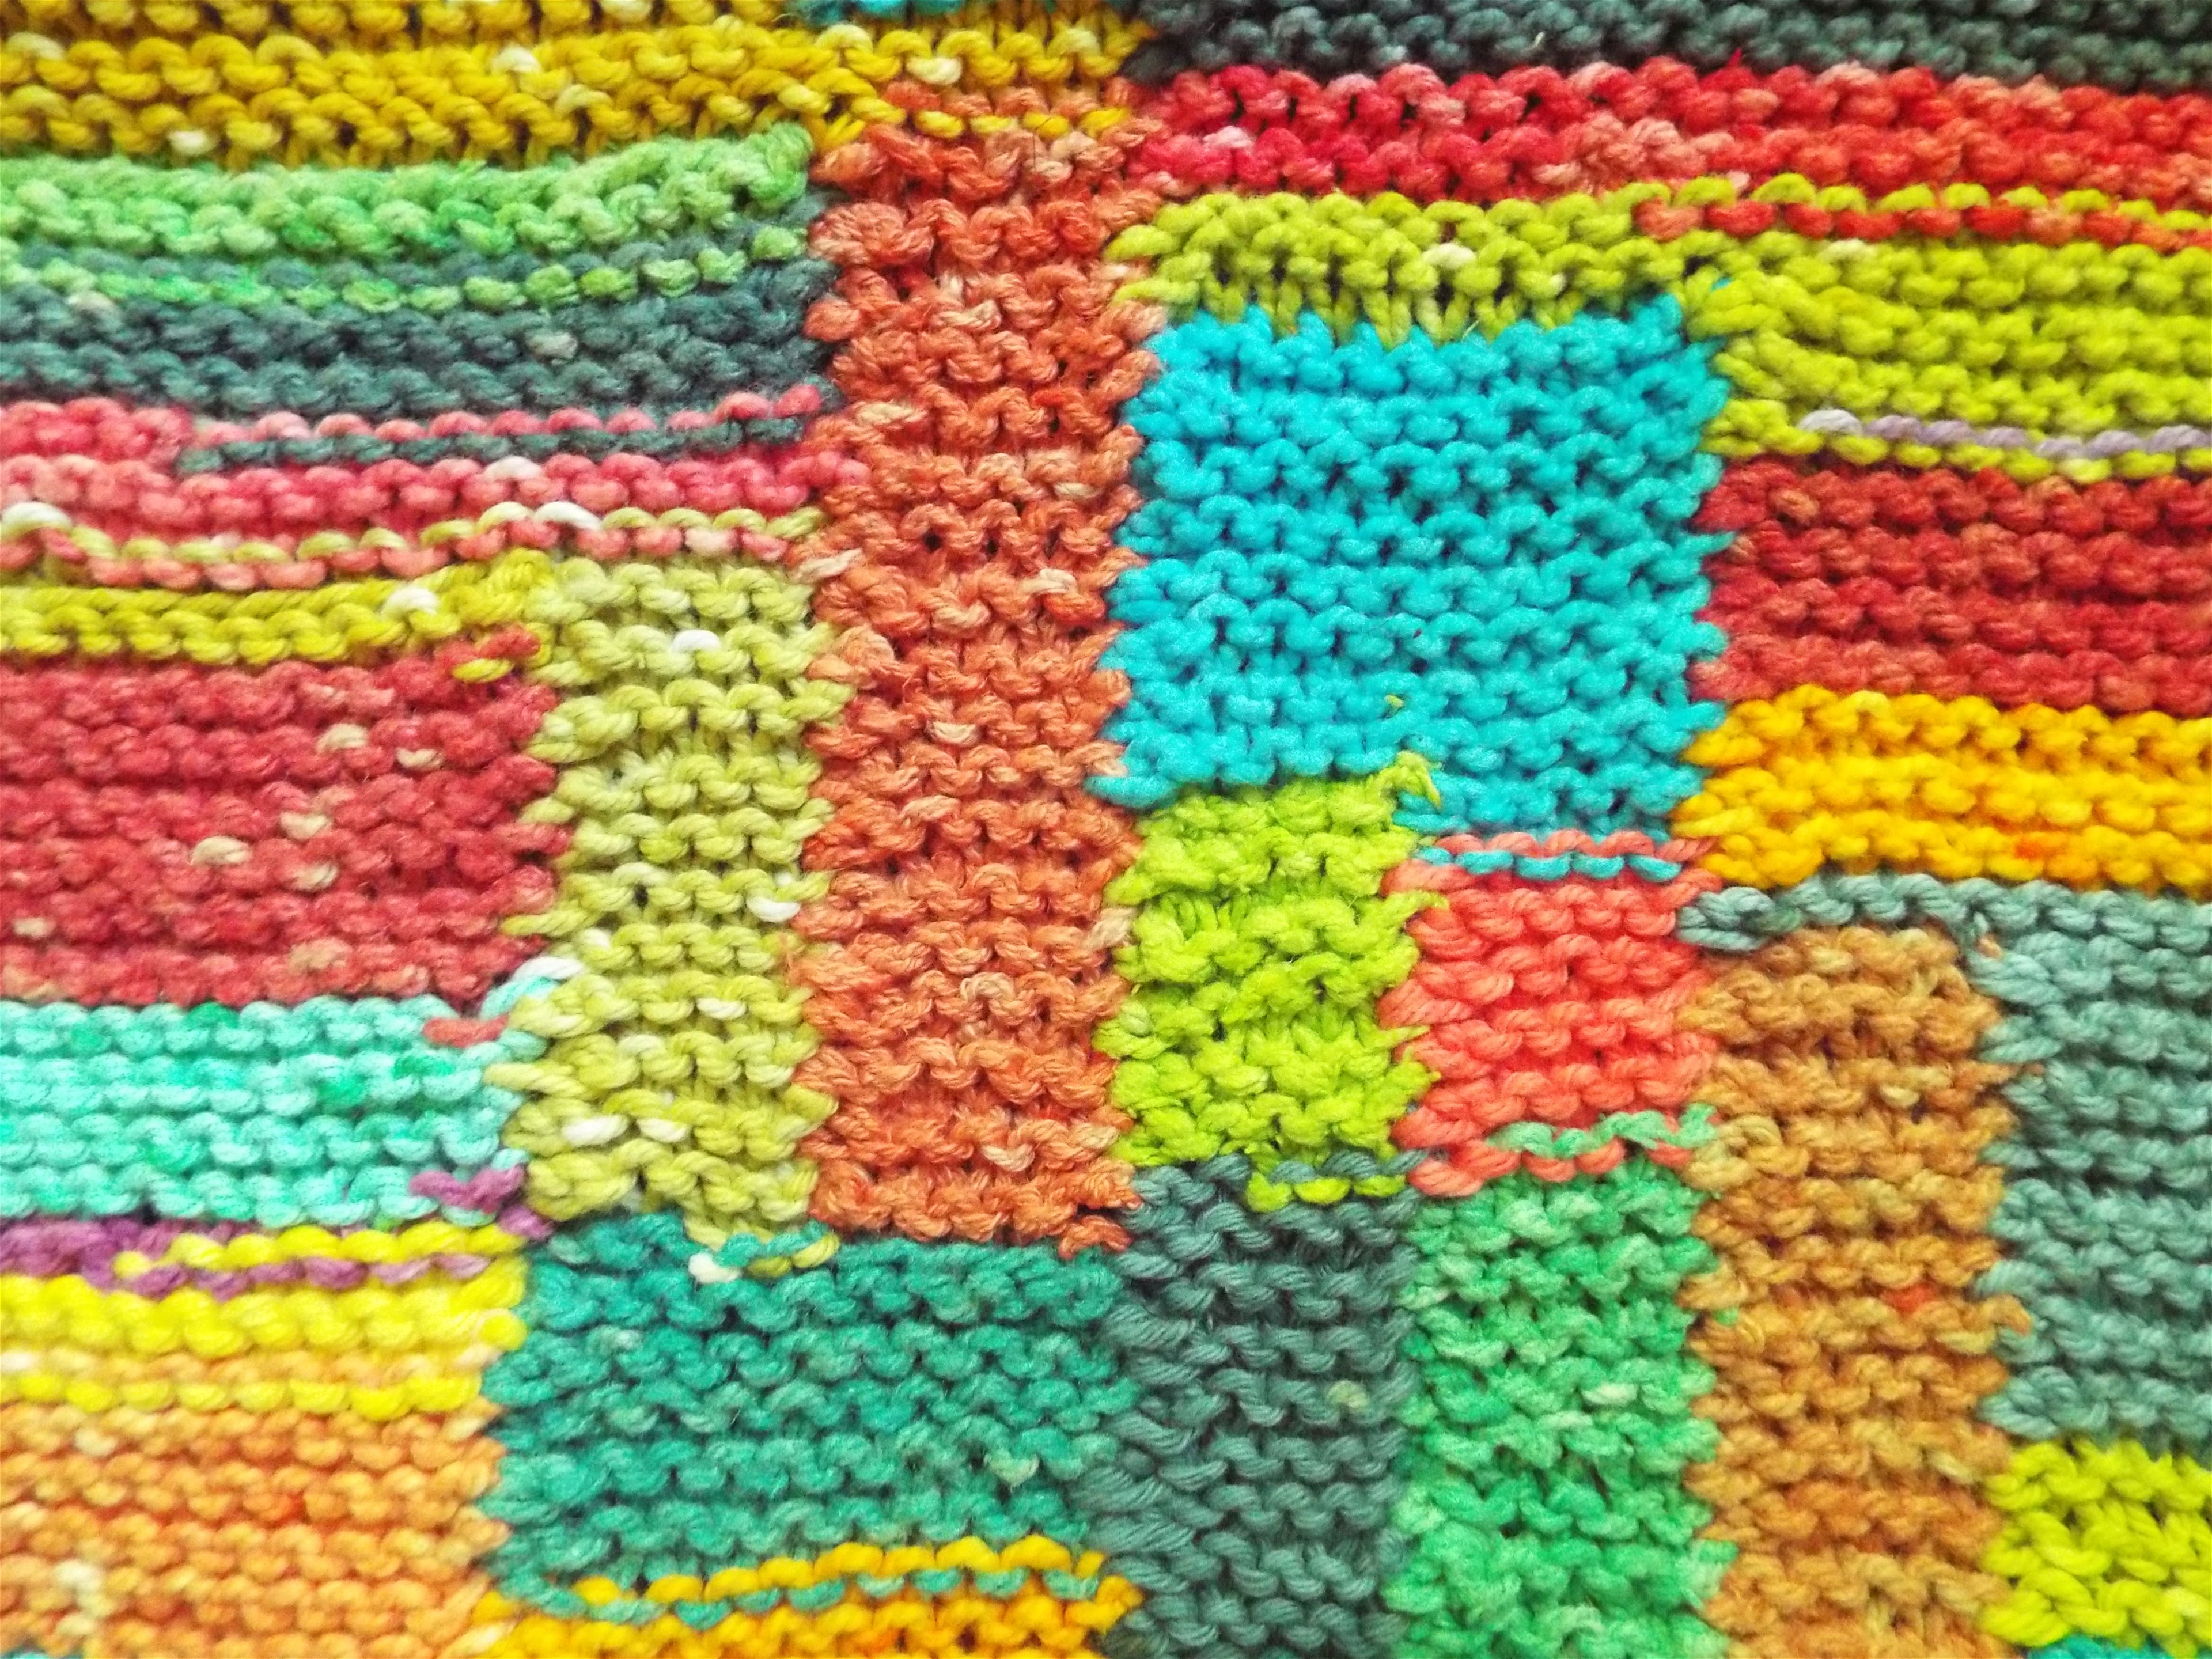 Knitting the Rainbow